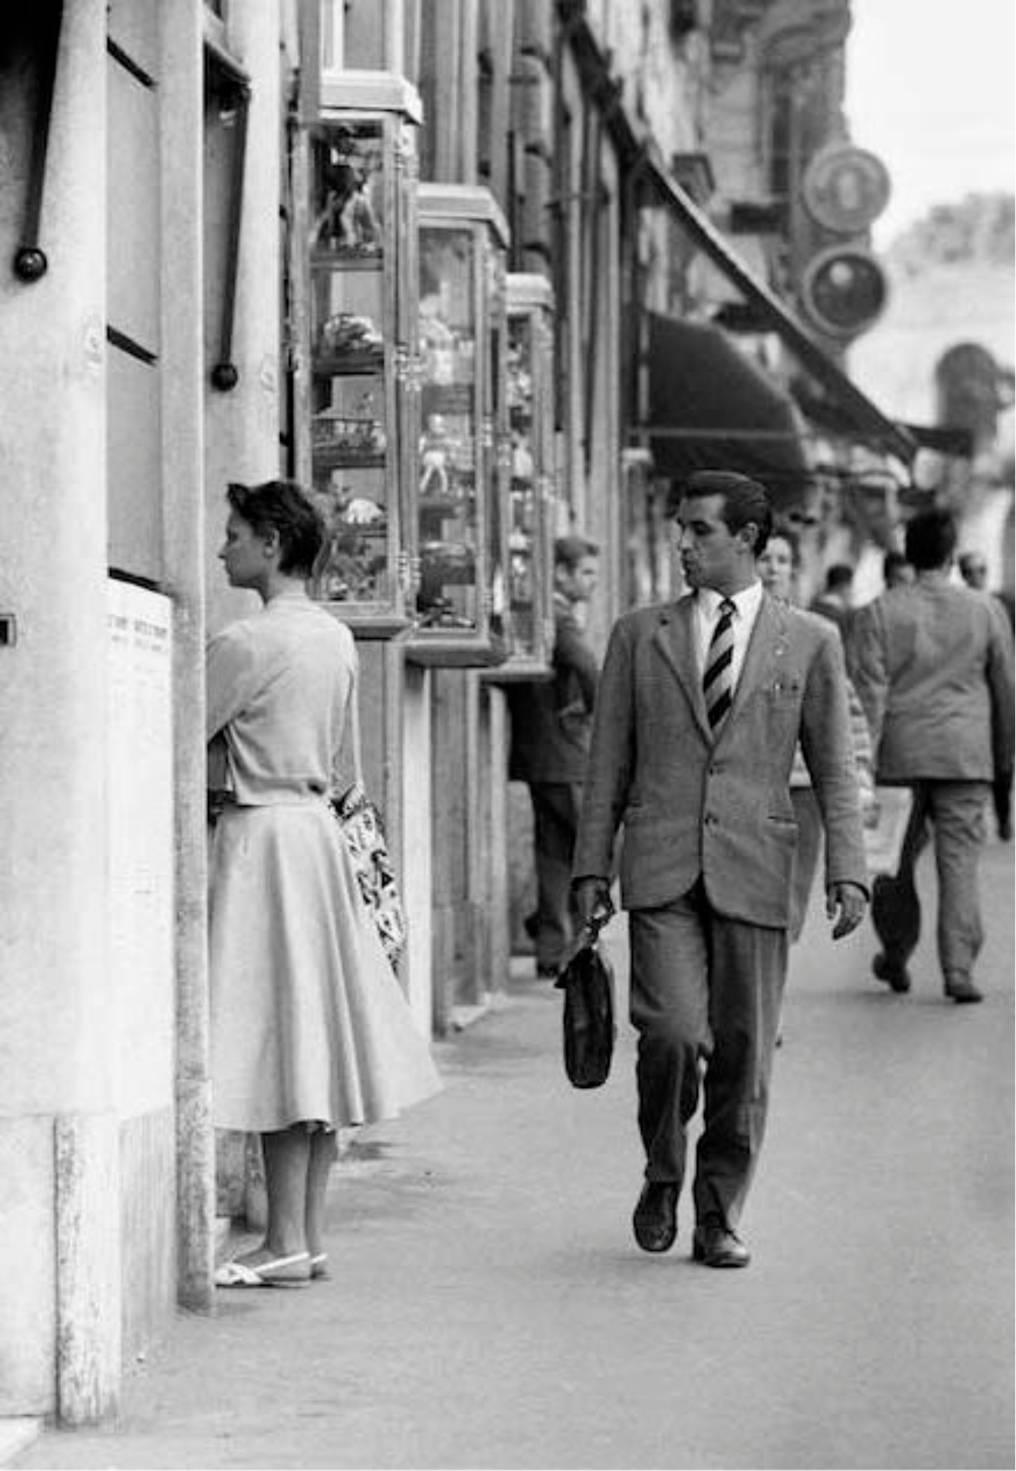 Art Shay Black and White Photograph - Roma, An Italian Gentleman Enjoying a Beautiful Woman, Black & White Photograph